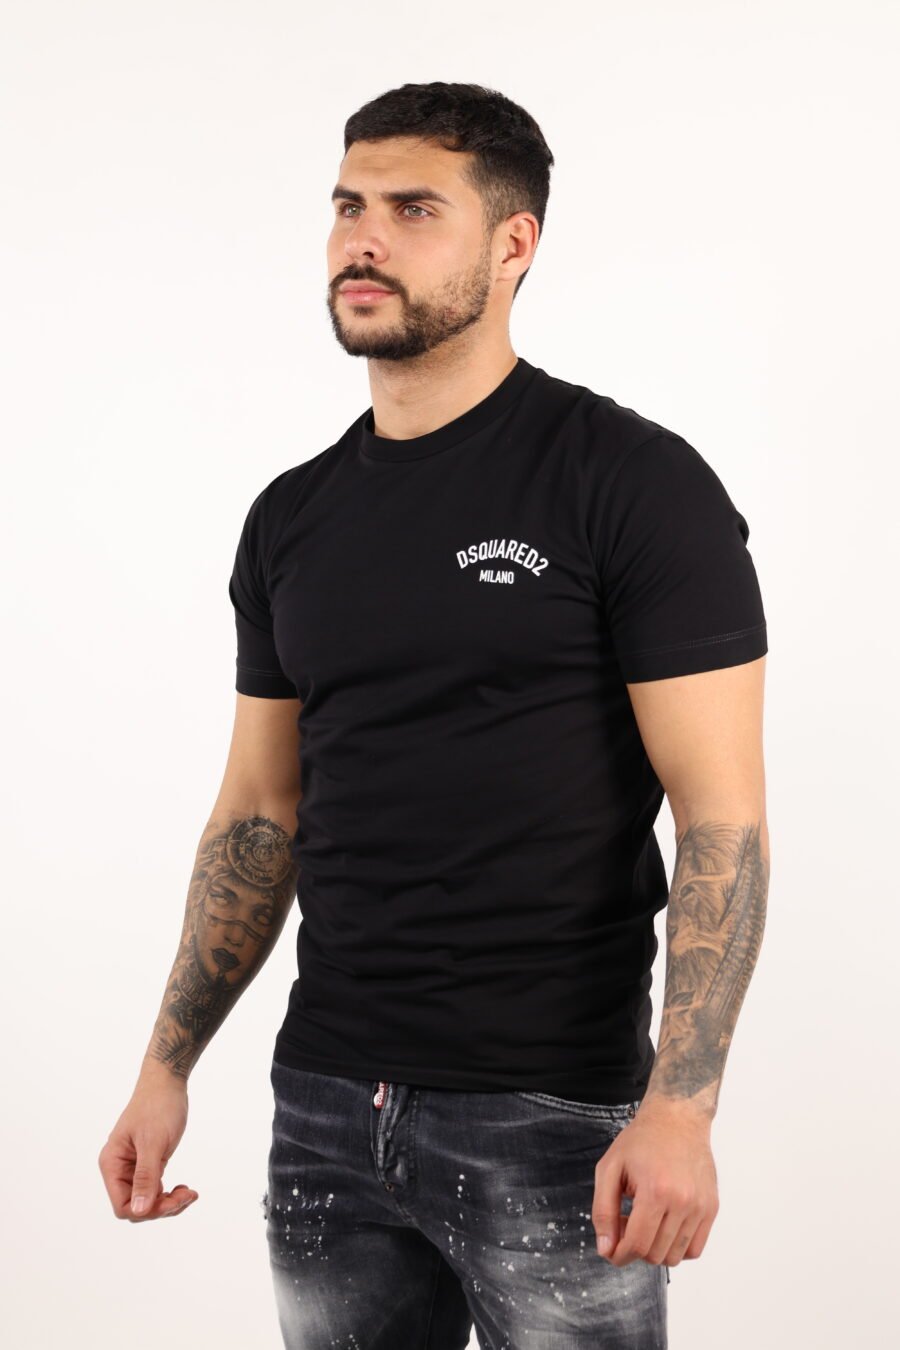 Camiseta negra con logo doblado "milano" - 109200